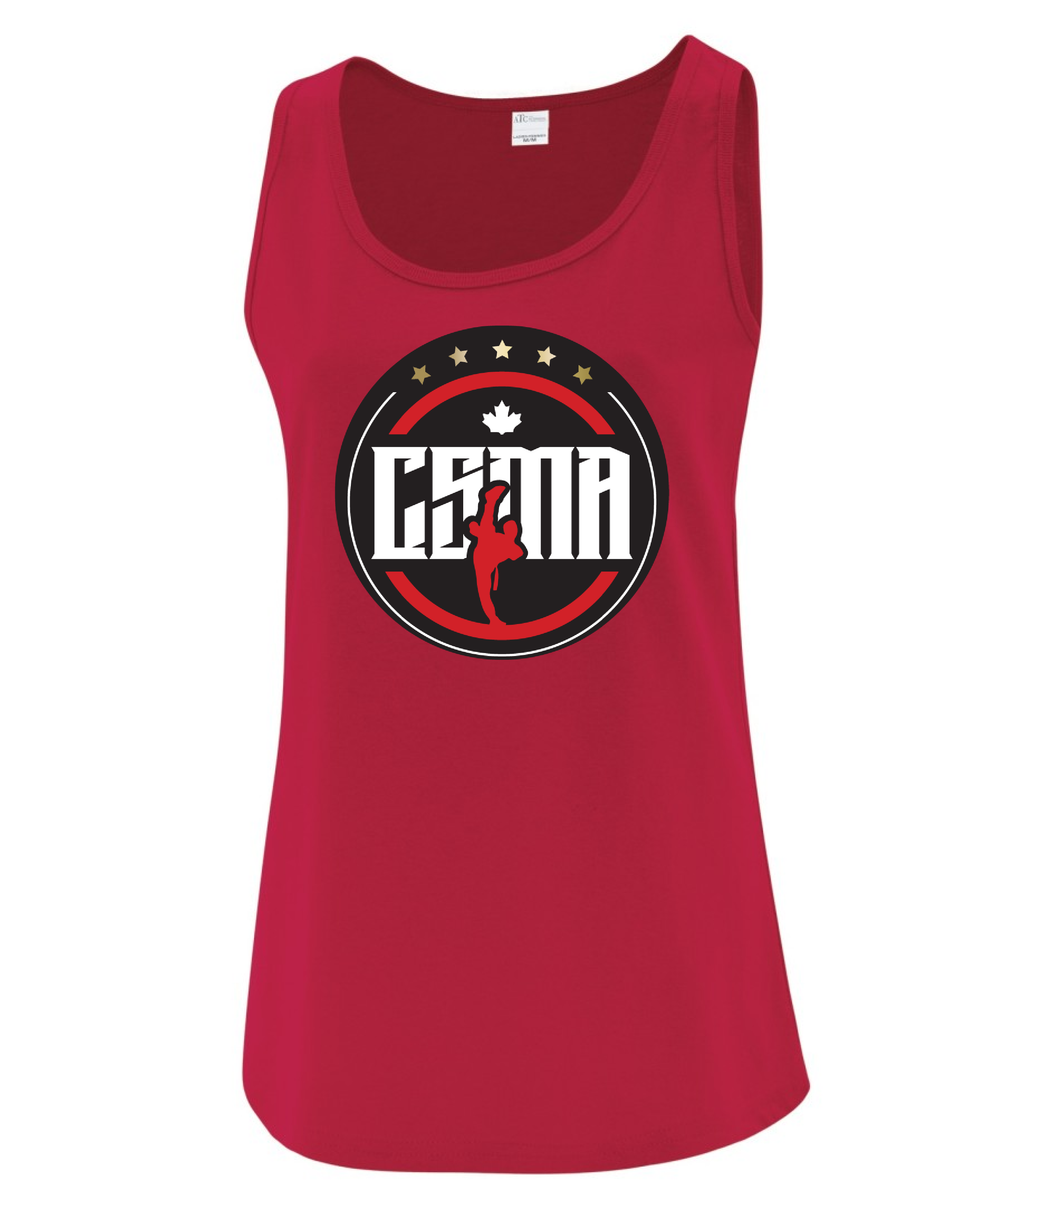 Red Women's Tank Top - CSMA logo